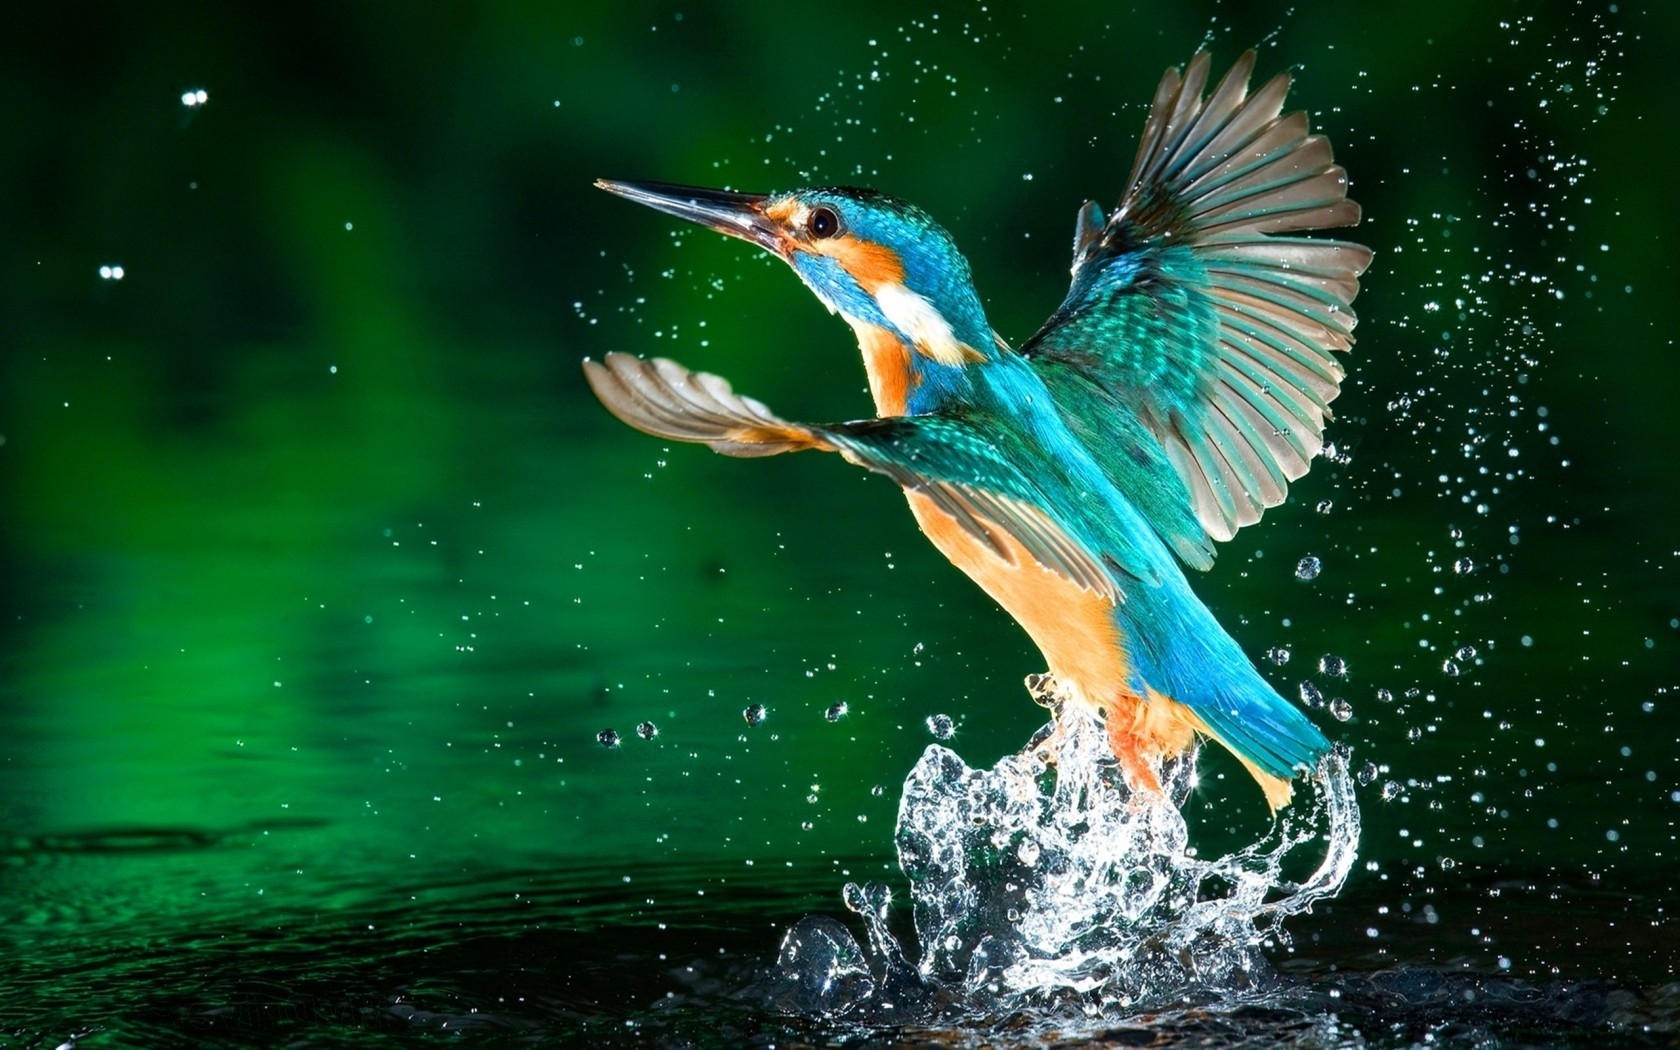 Kingfisher Bird for 1680 x 1050 widescreen resolution